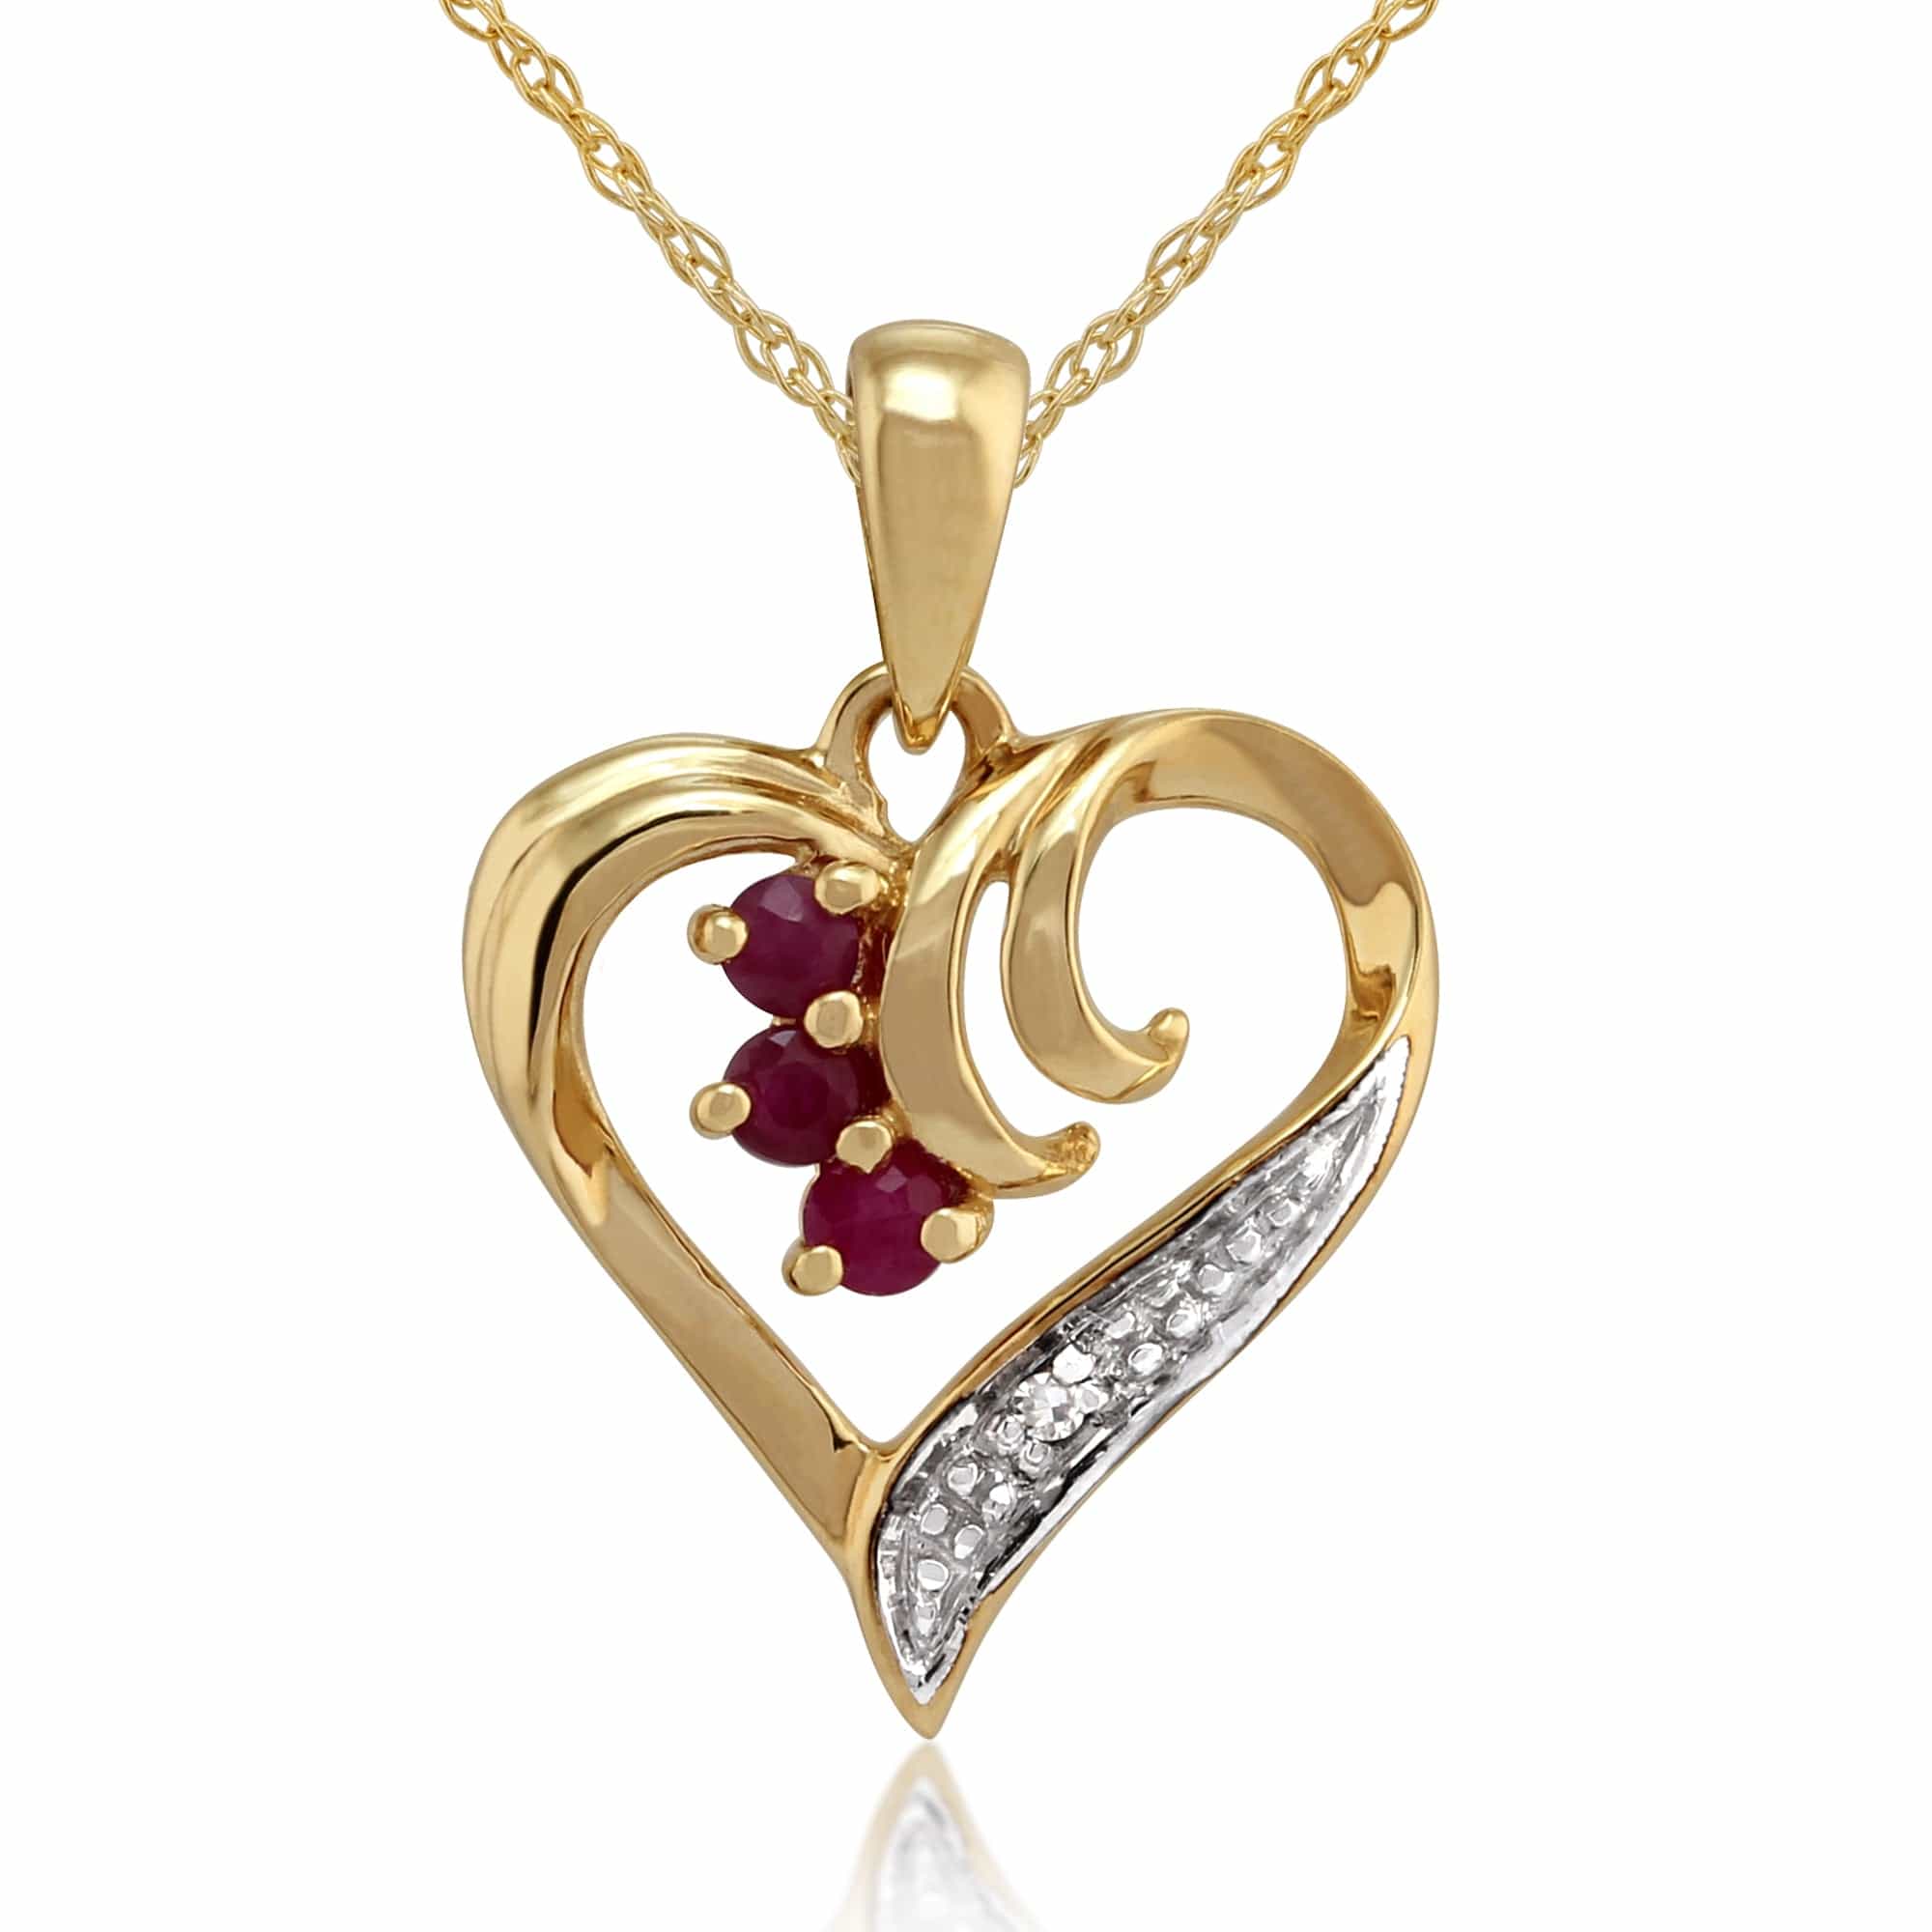 Classic Round Ruby & Diamond Love Heart Stud Earrings & Pendant Set in 9ct Yellow Gold - Gemondo